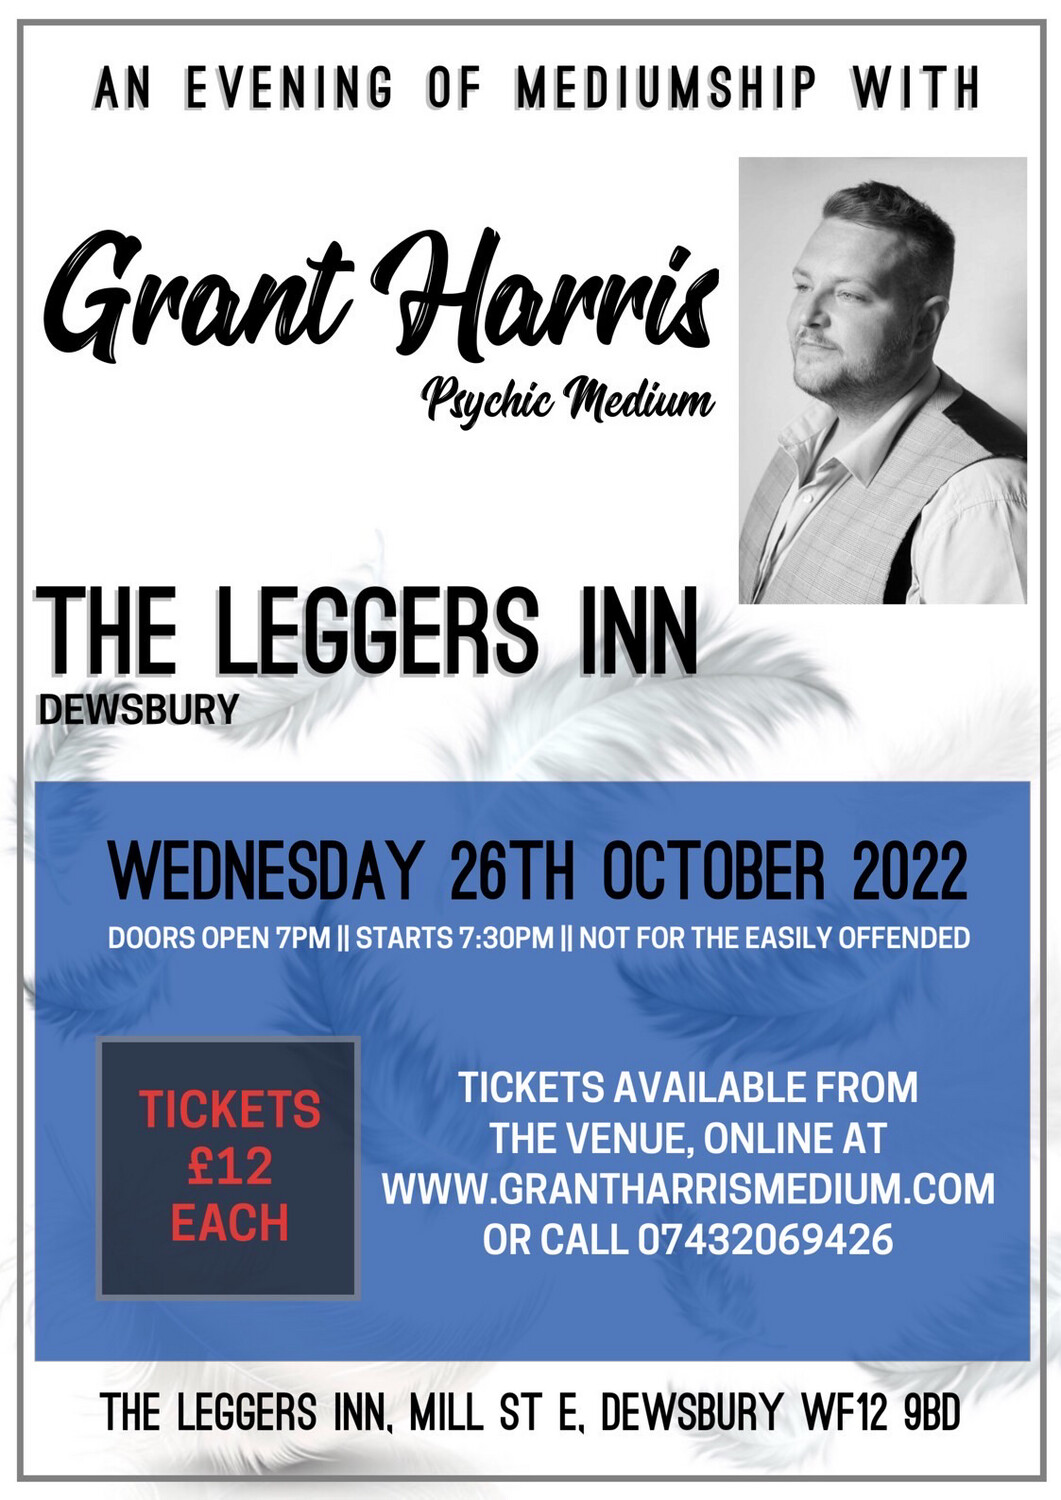 Leggers inn, Dewsbury, Weds 26th October 2022